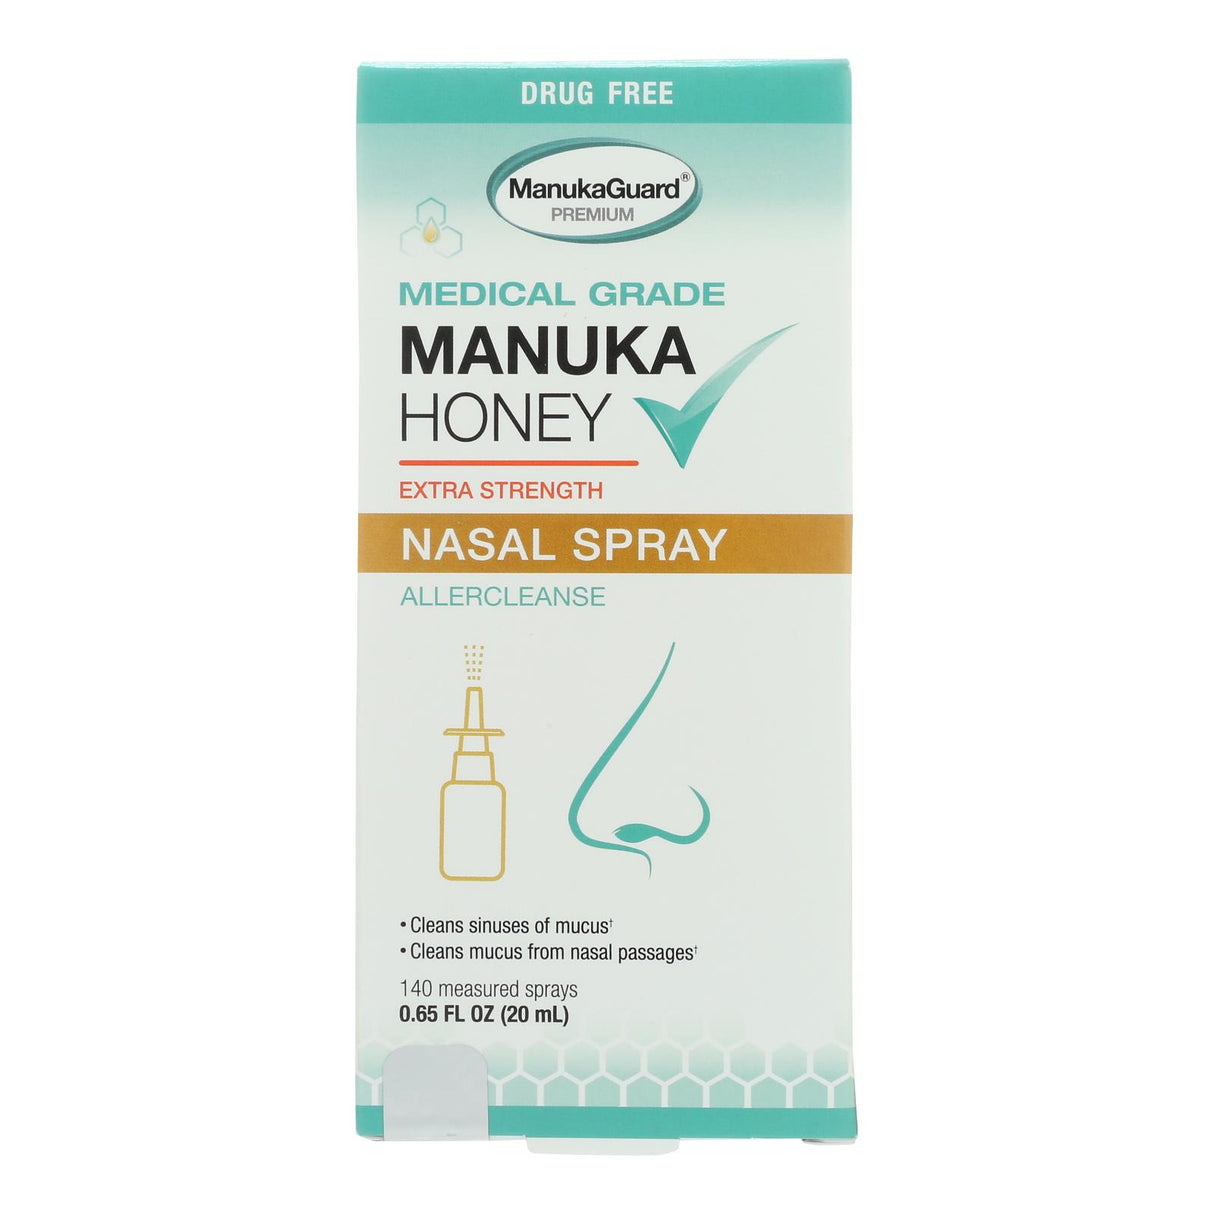 Manukaguard Allercleanse Nasal Spray - Reduces Allergic Reactions, 0.65 Fl. Oz - Cozy Farm 